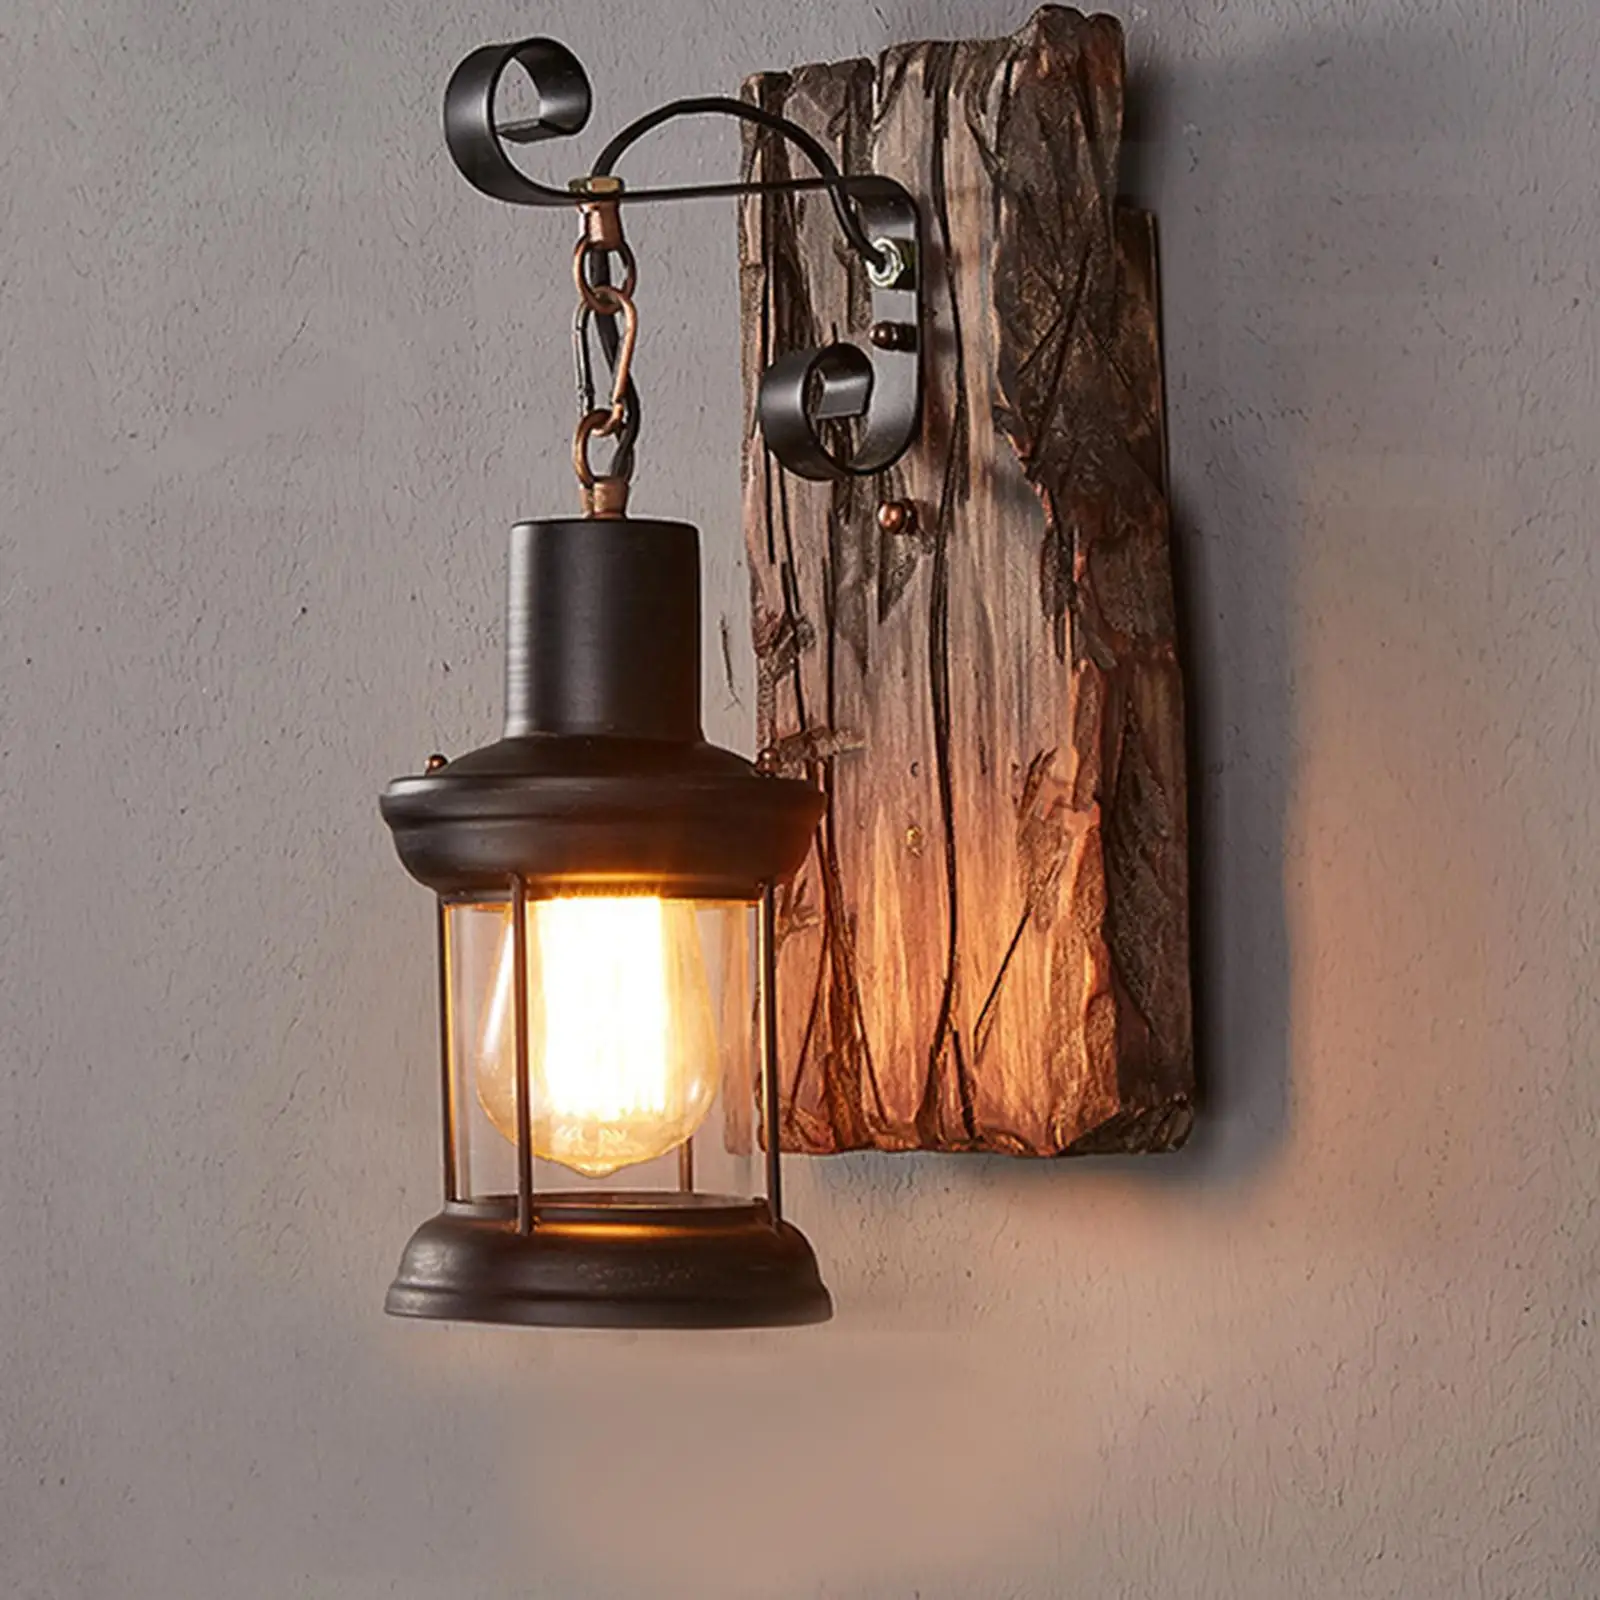 Rustic Lantern Art Wall Lamp for Bar Restaurant Barn